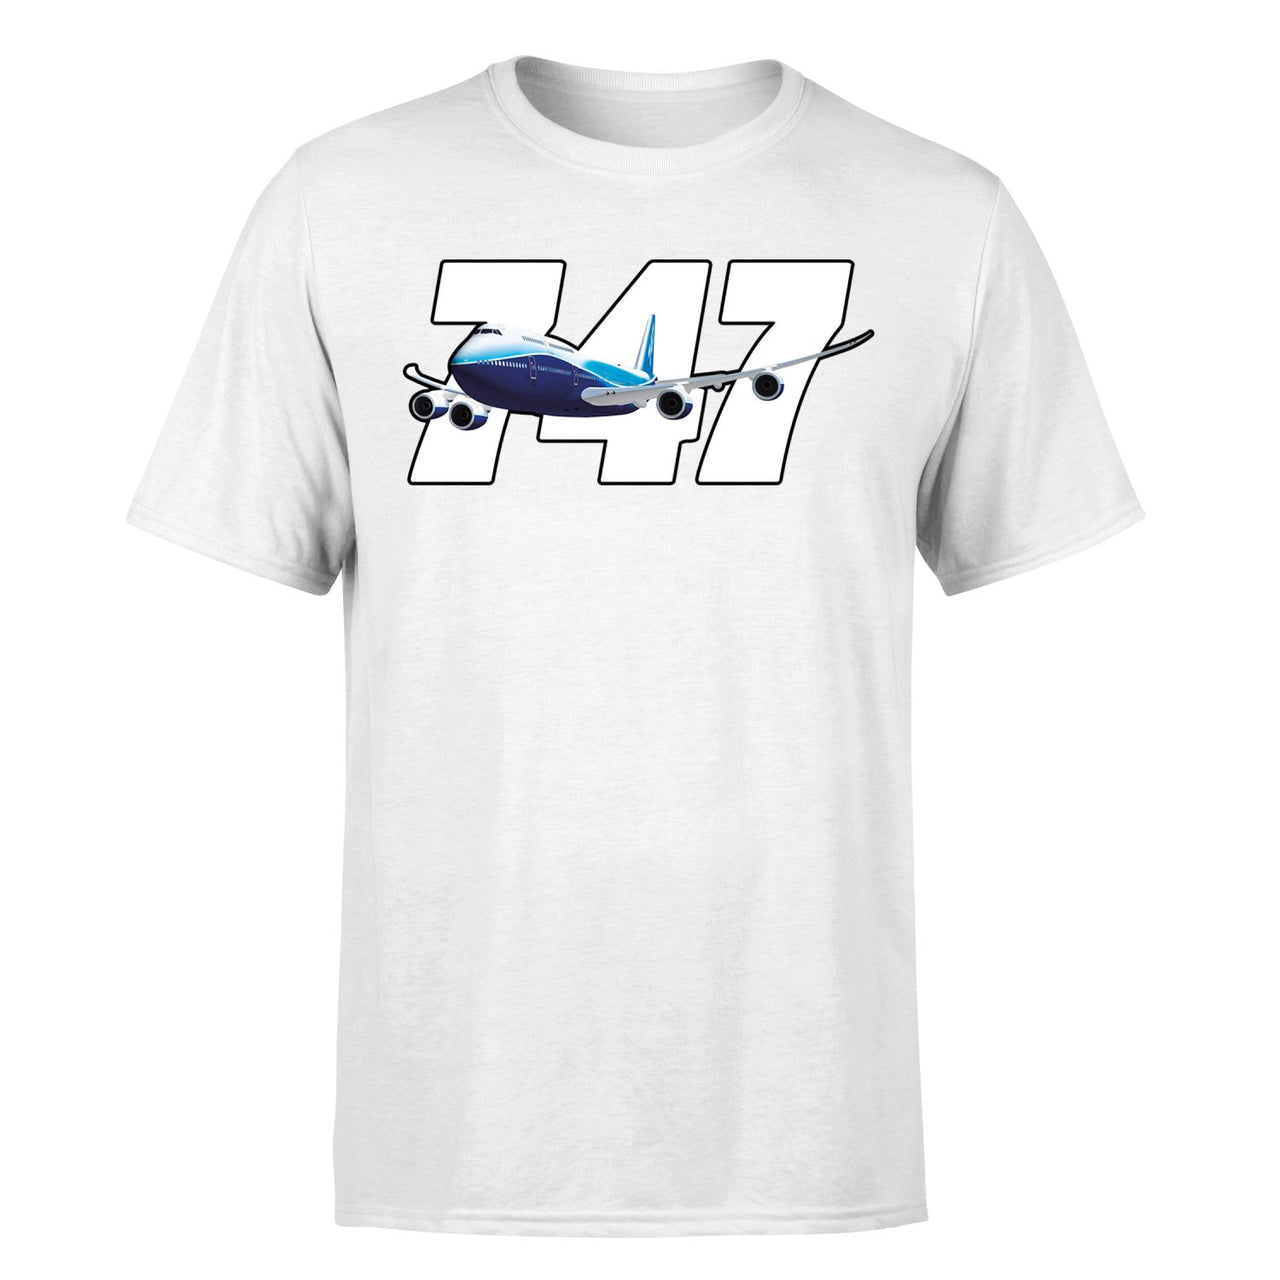 Super Boeing 747 Designed T-Shirts